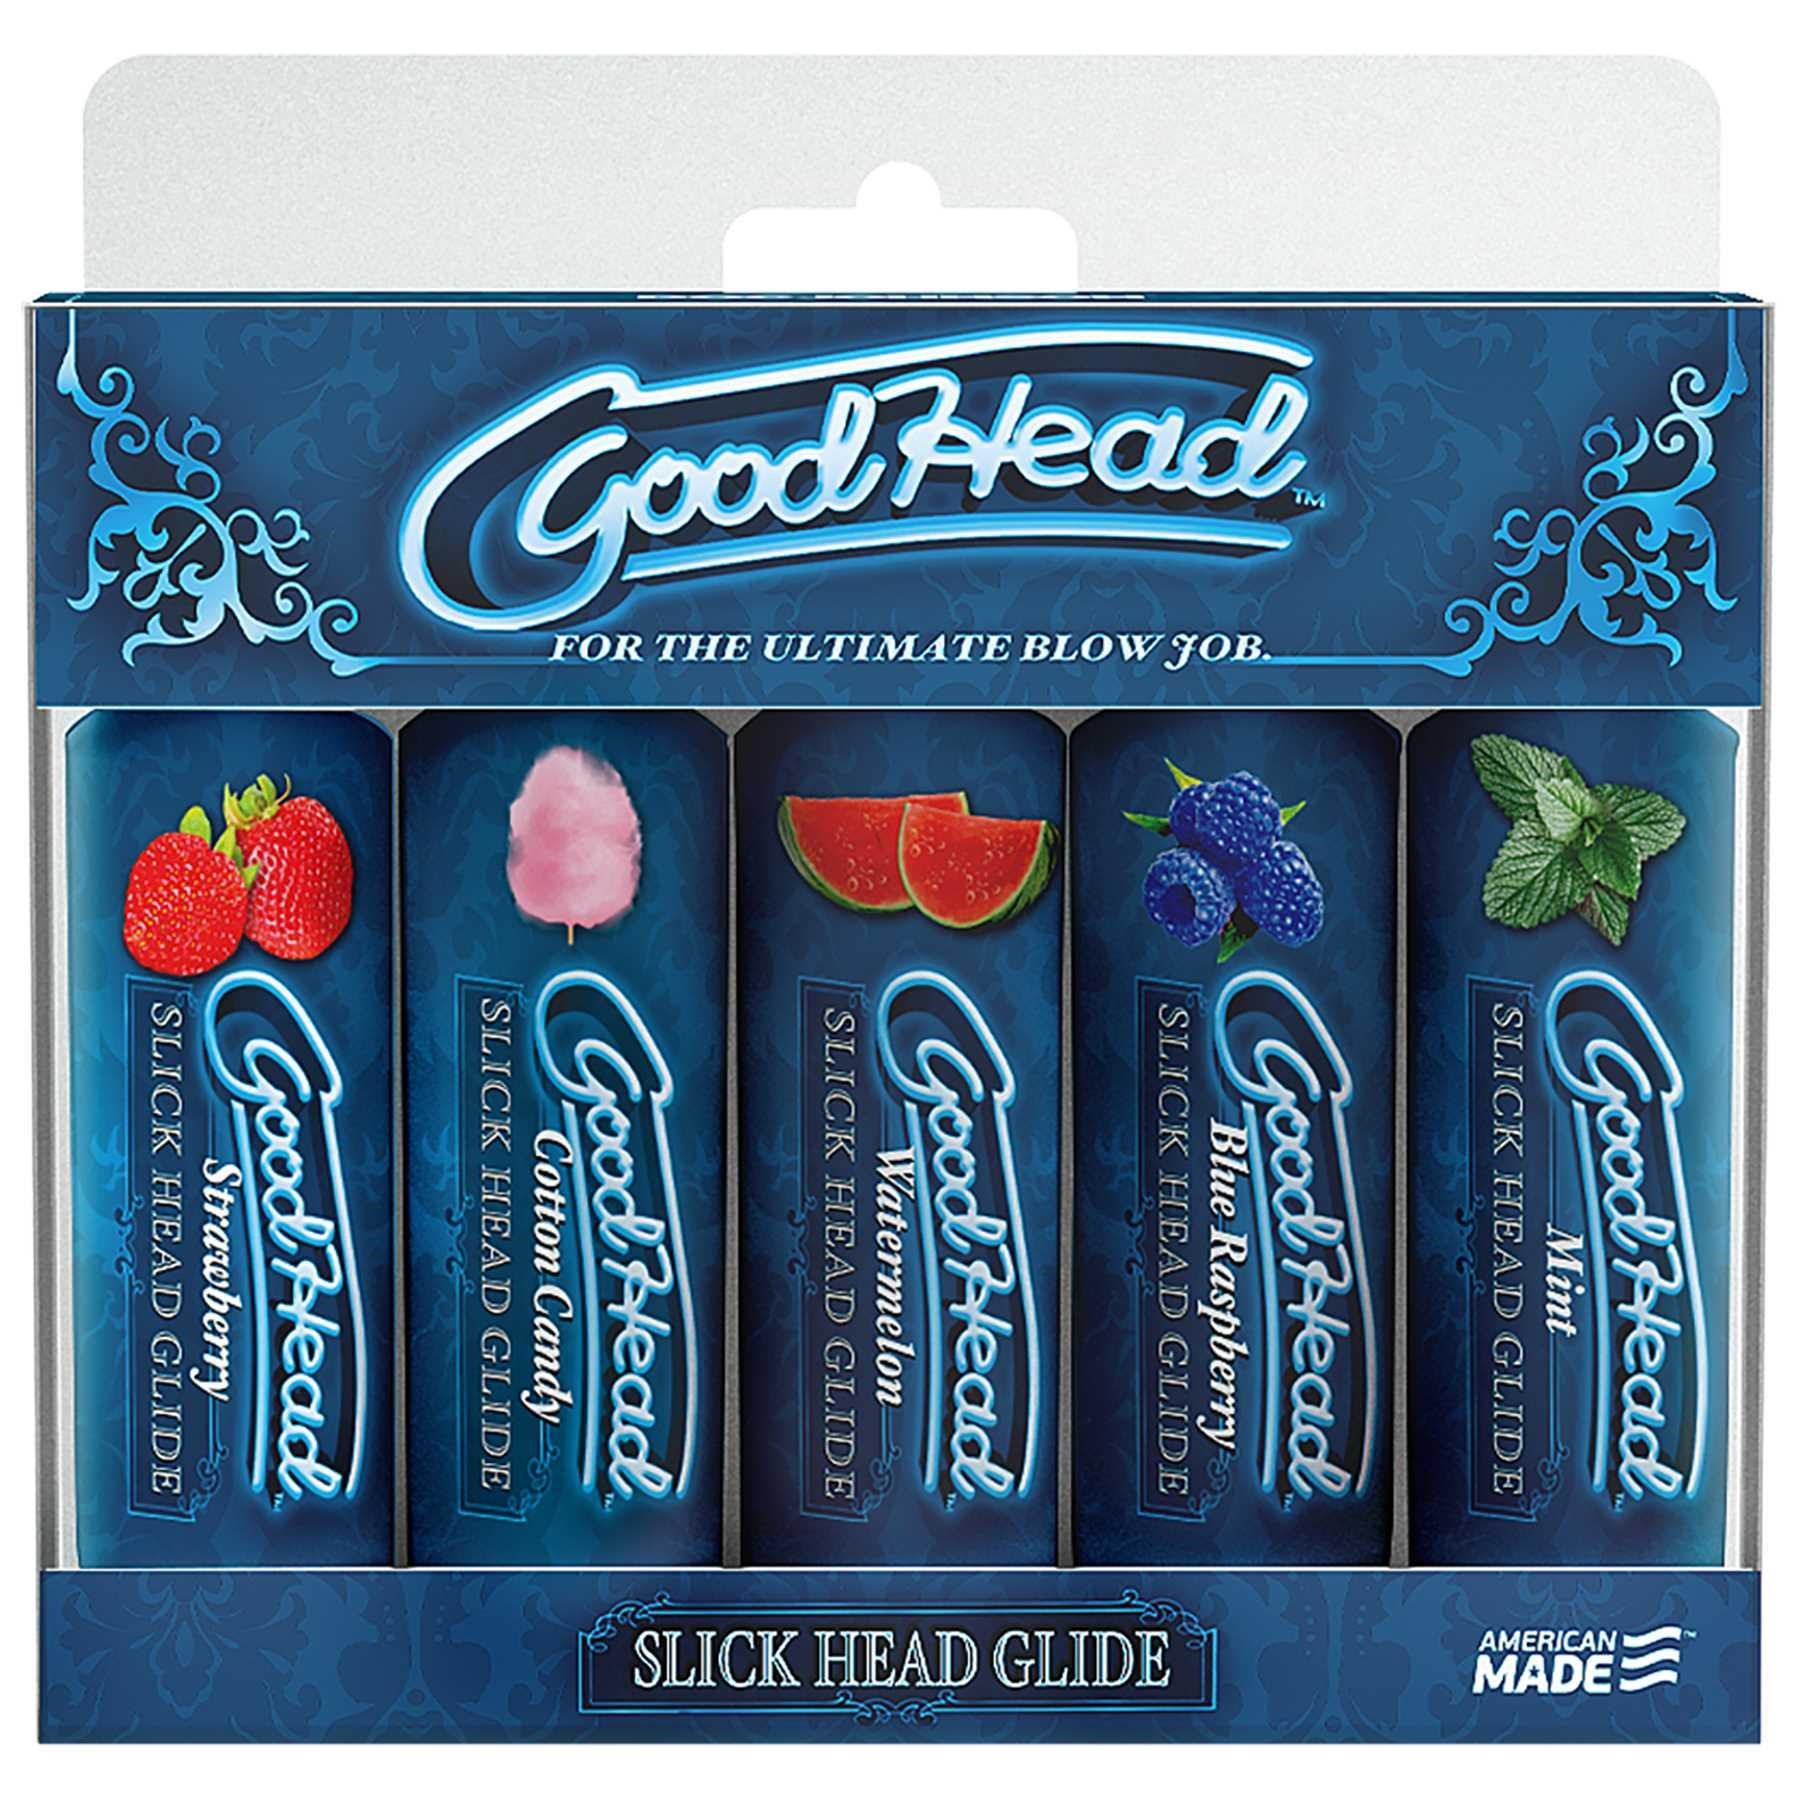 GoodHead - Slick Head Glide - 5 Pack - 1 fl. oz in packaging